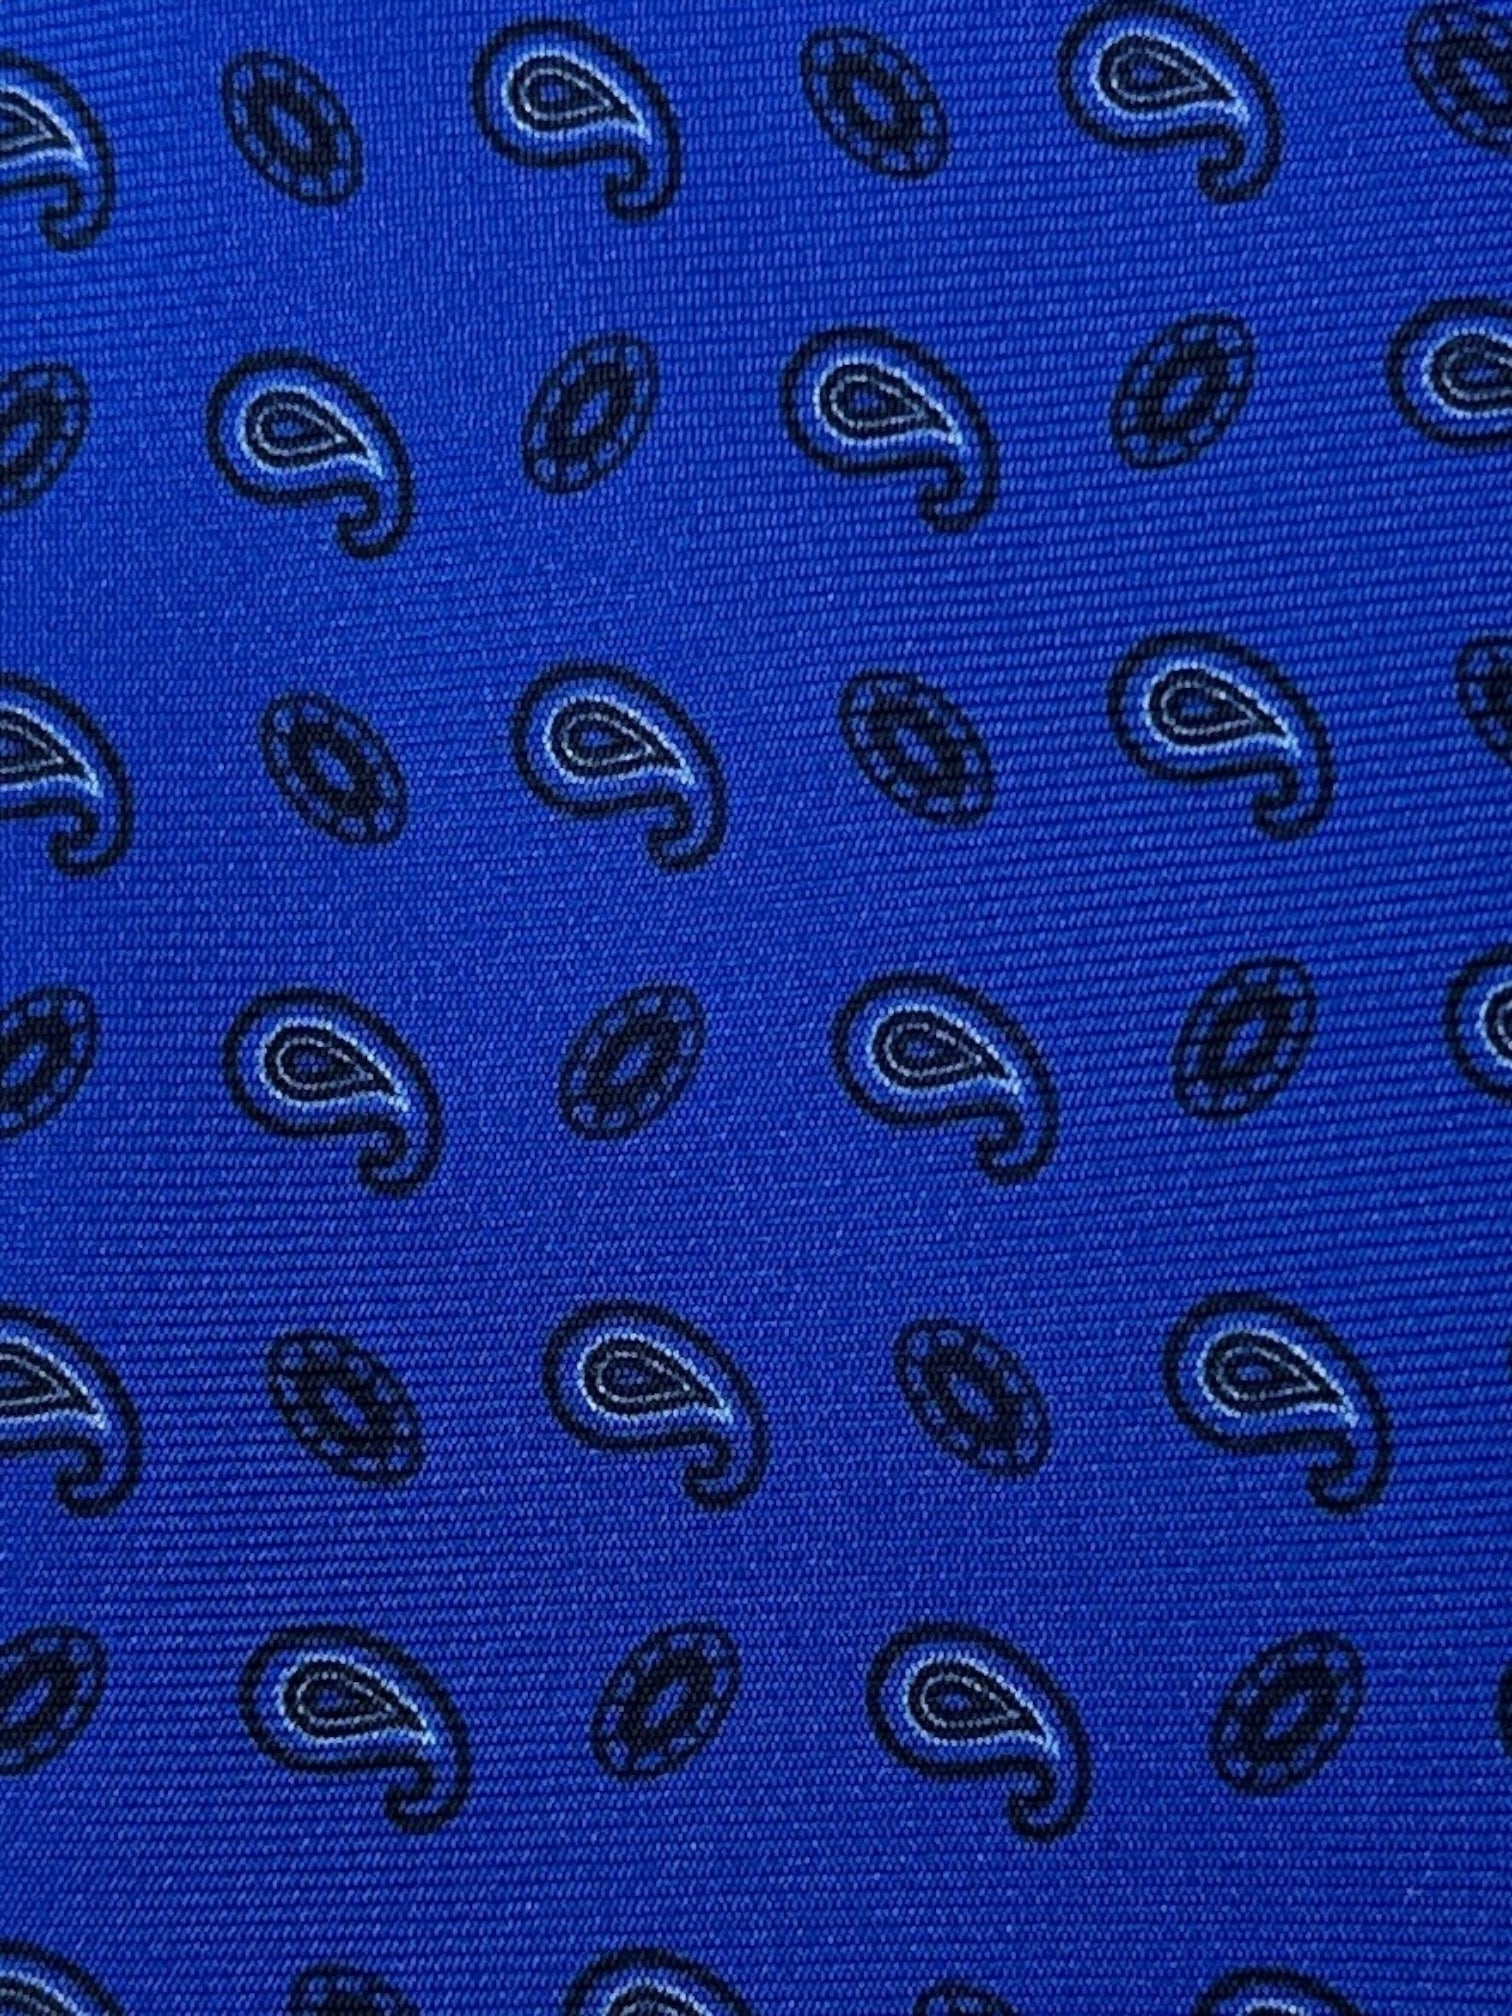 Kiton 7-Fold Royal Blue Paisley Tie